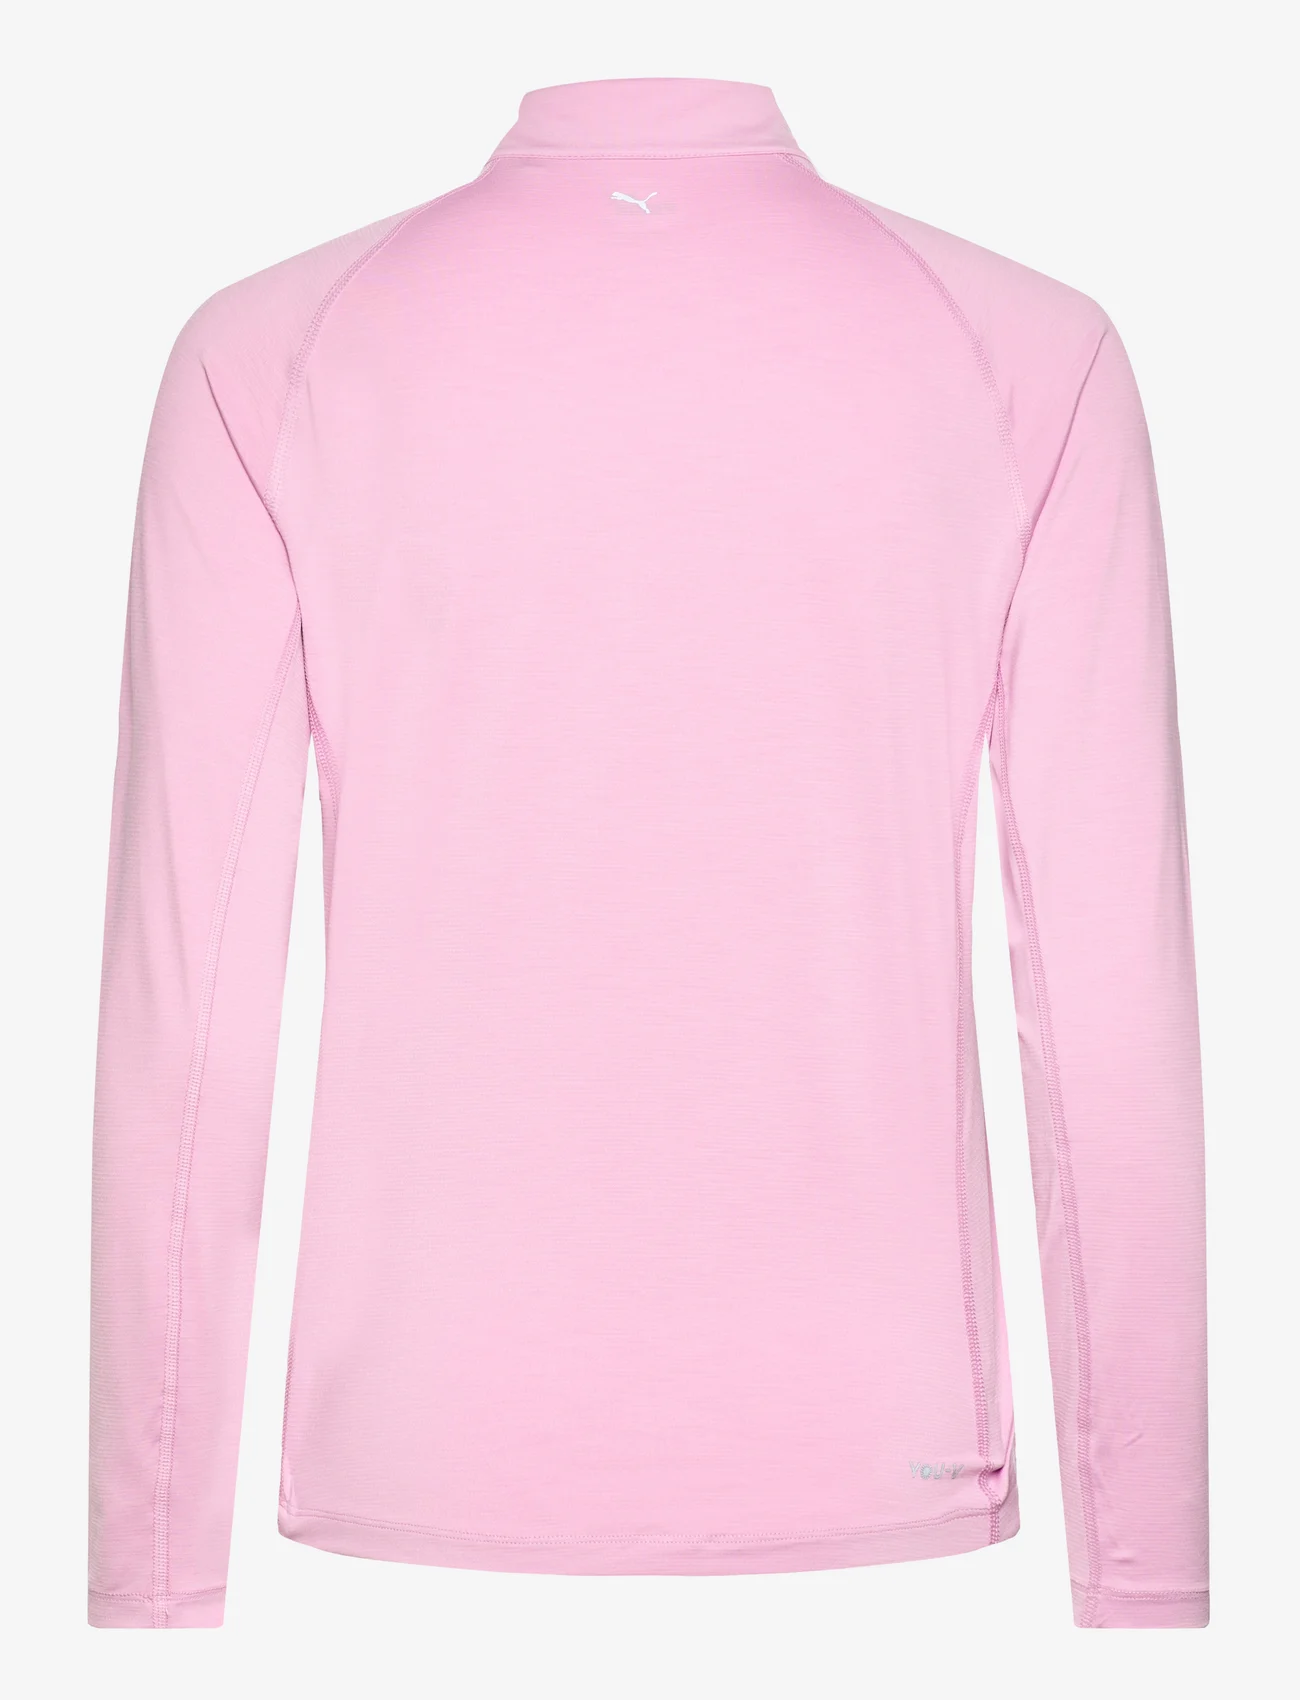 PUMA Golf - W You-V Solid 1/4 Zip - midlayer-jakker - pink icing - 1